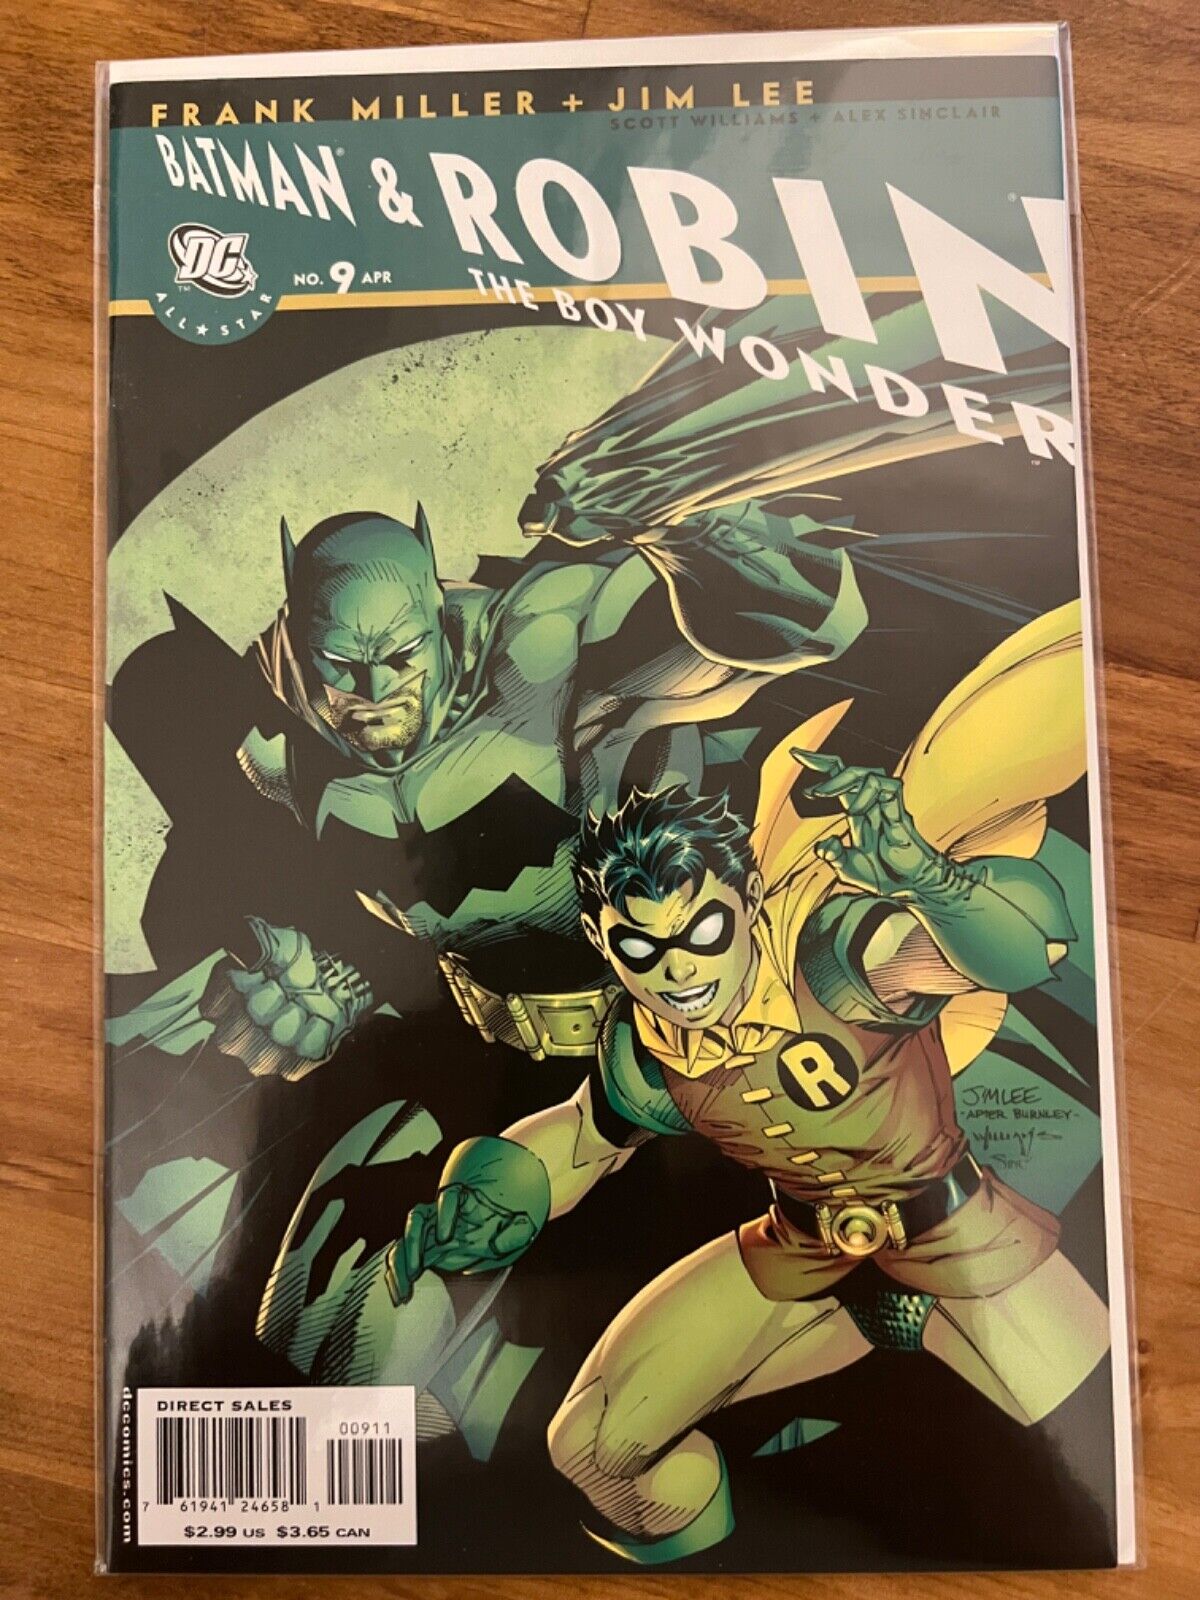 All-Star Batman & Robin #9 - DC Comics - Frank Miller - Jim Lee - 2008